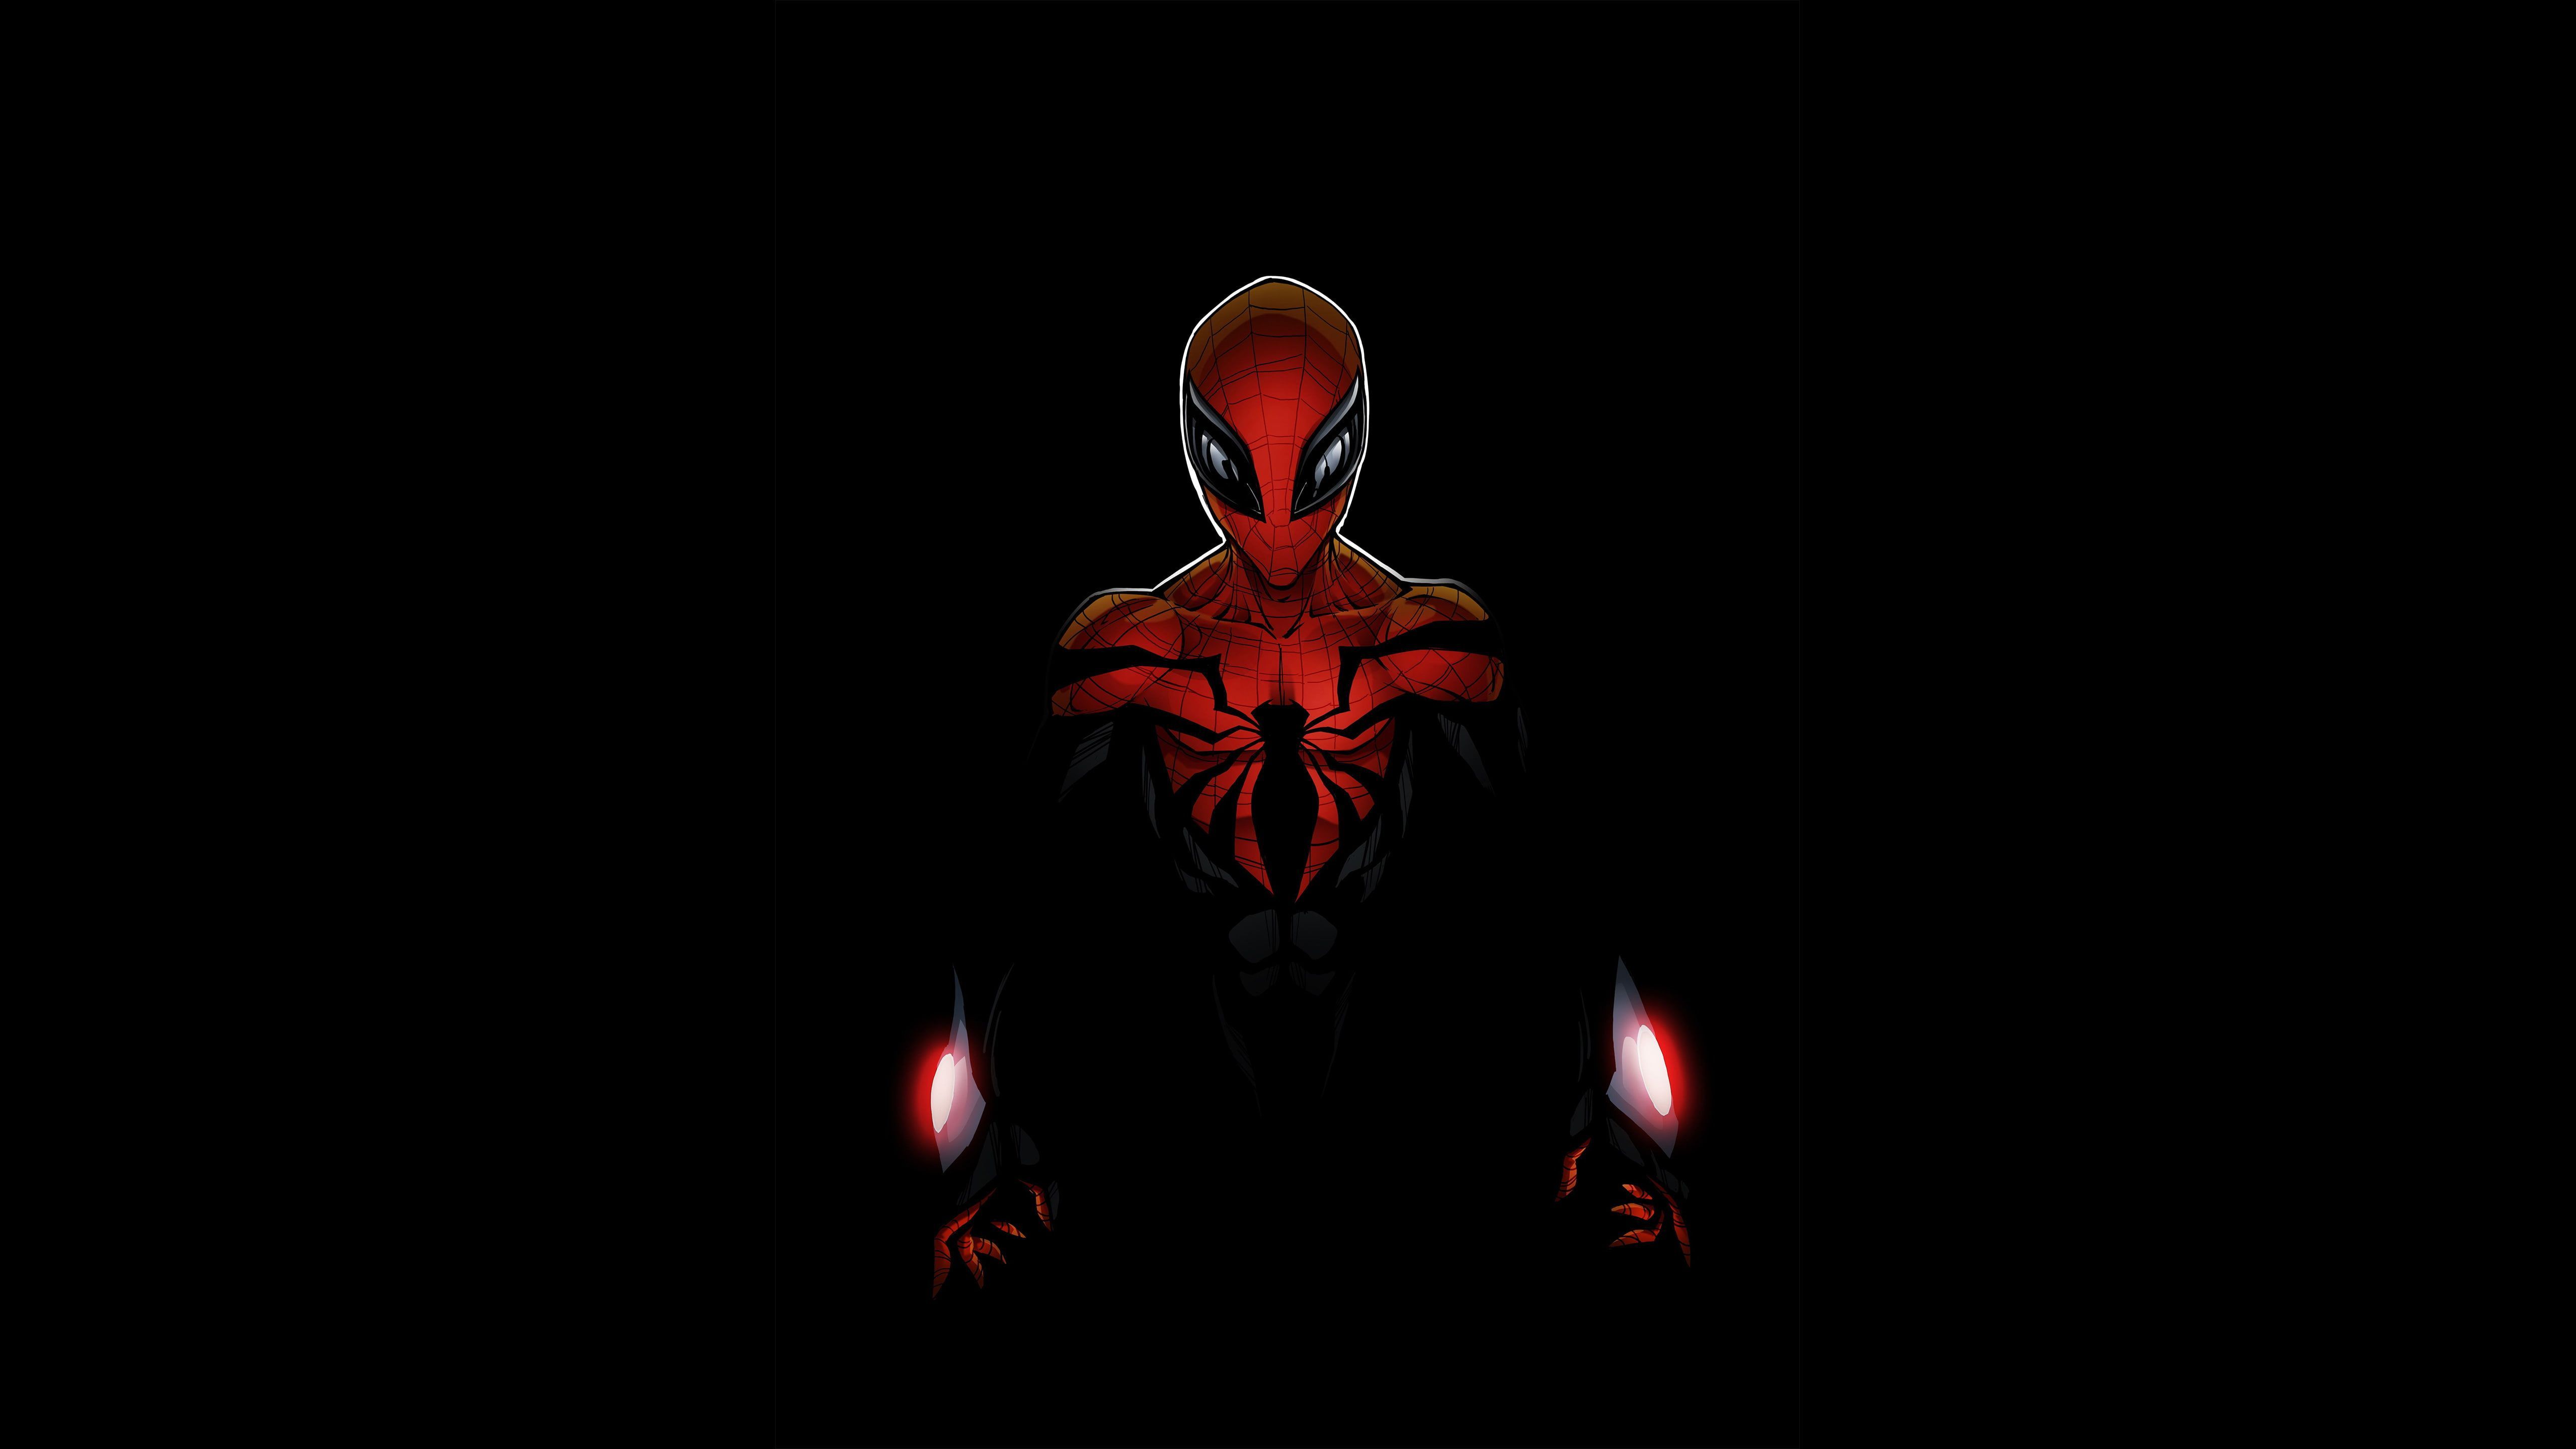 Spider Man #Black Marvel Comics K #Minimal K #wallpaper #hdwallpaper #desktop. Creative Graphics, Spiderman Artwork, Superhero Wallpaper